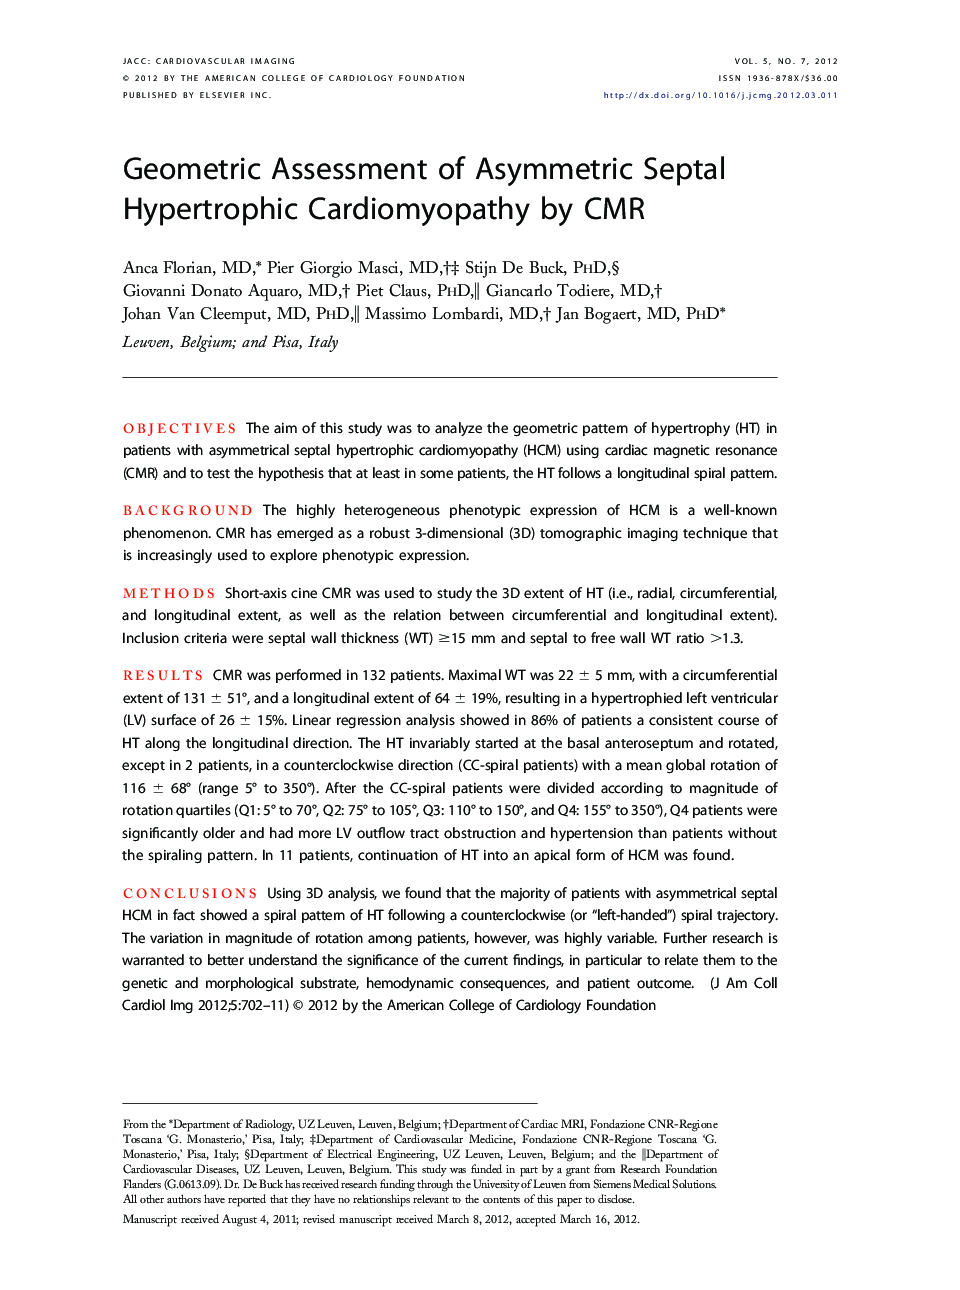 Geometric Assessment of Asymmetric Septal Hypertrophic Cardiomyopathy by CMR 